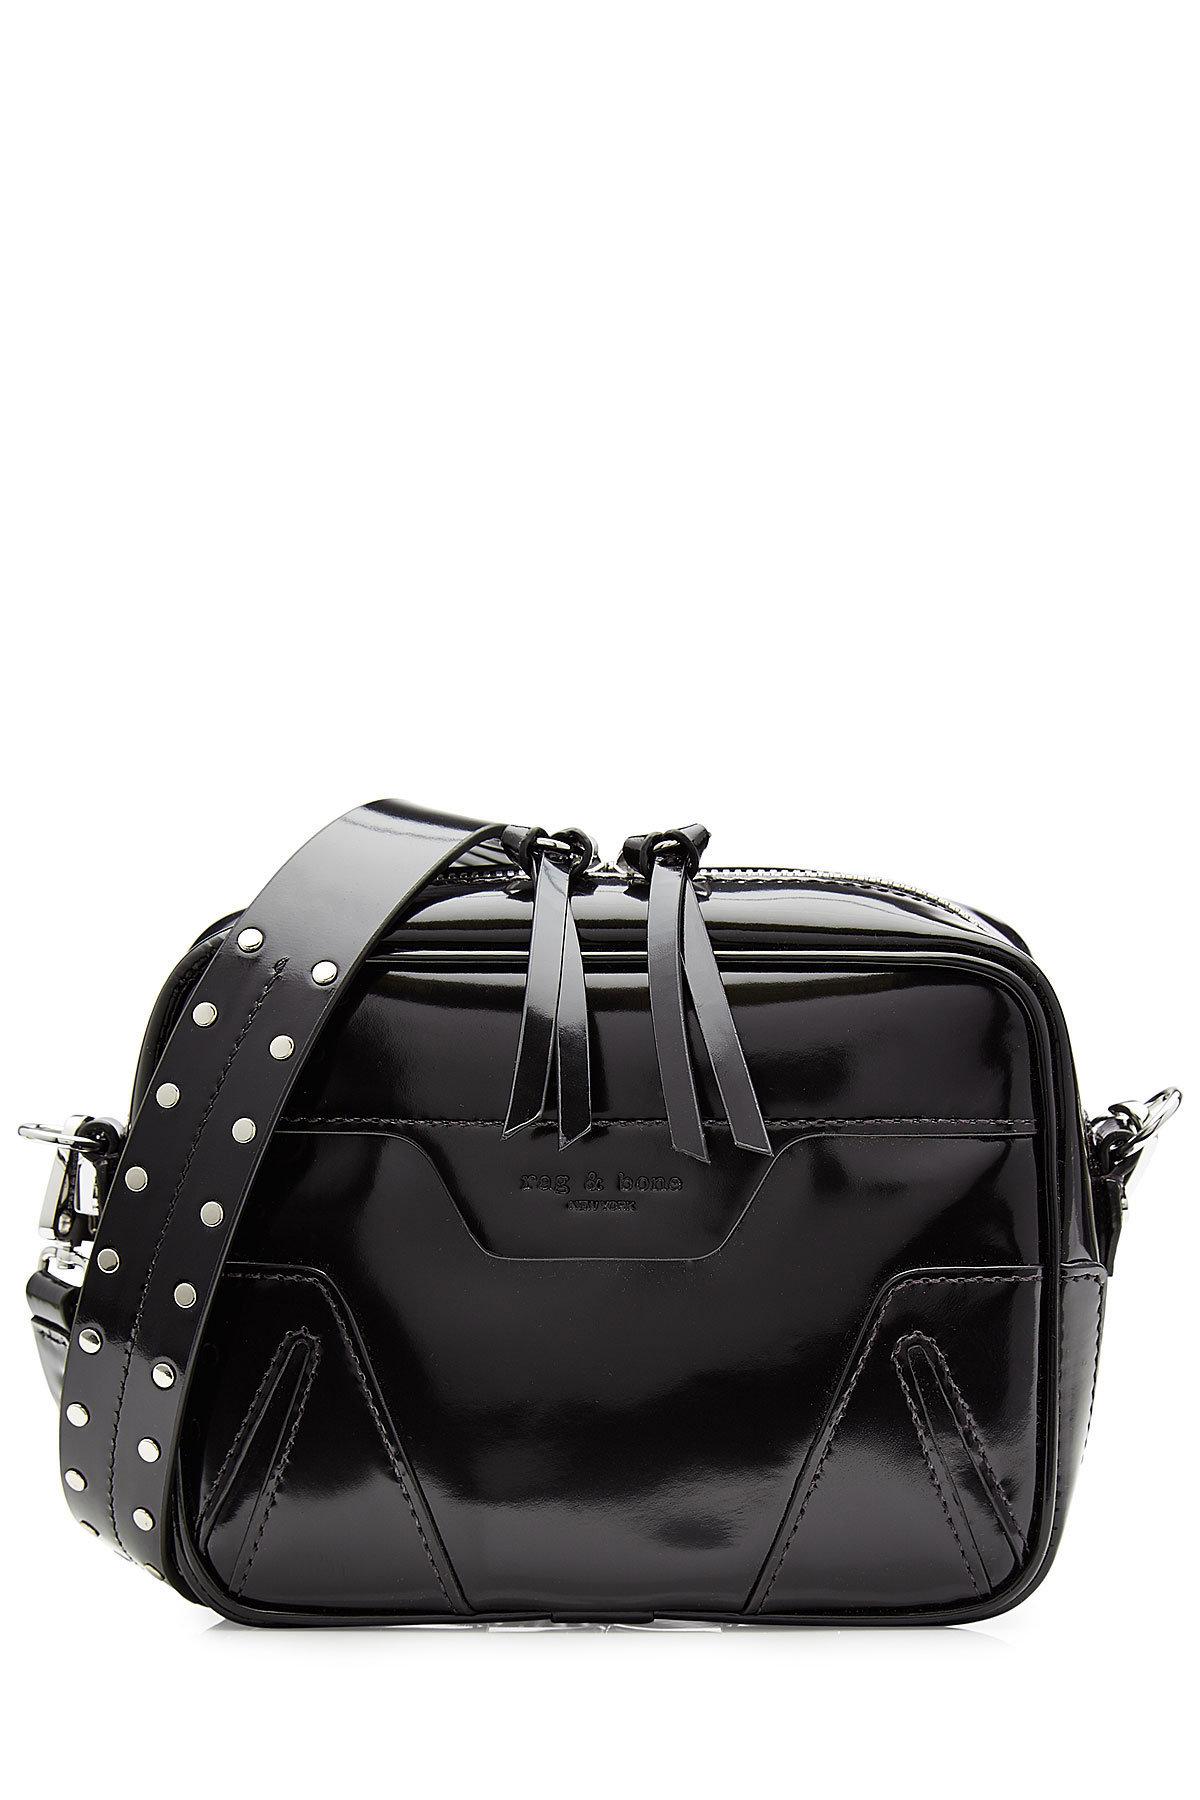 Black Patent Leather Crossbody Handbags | IUCN Water